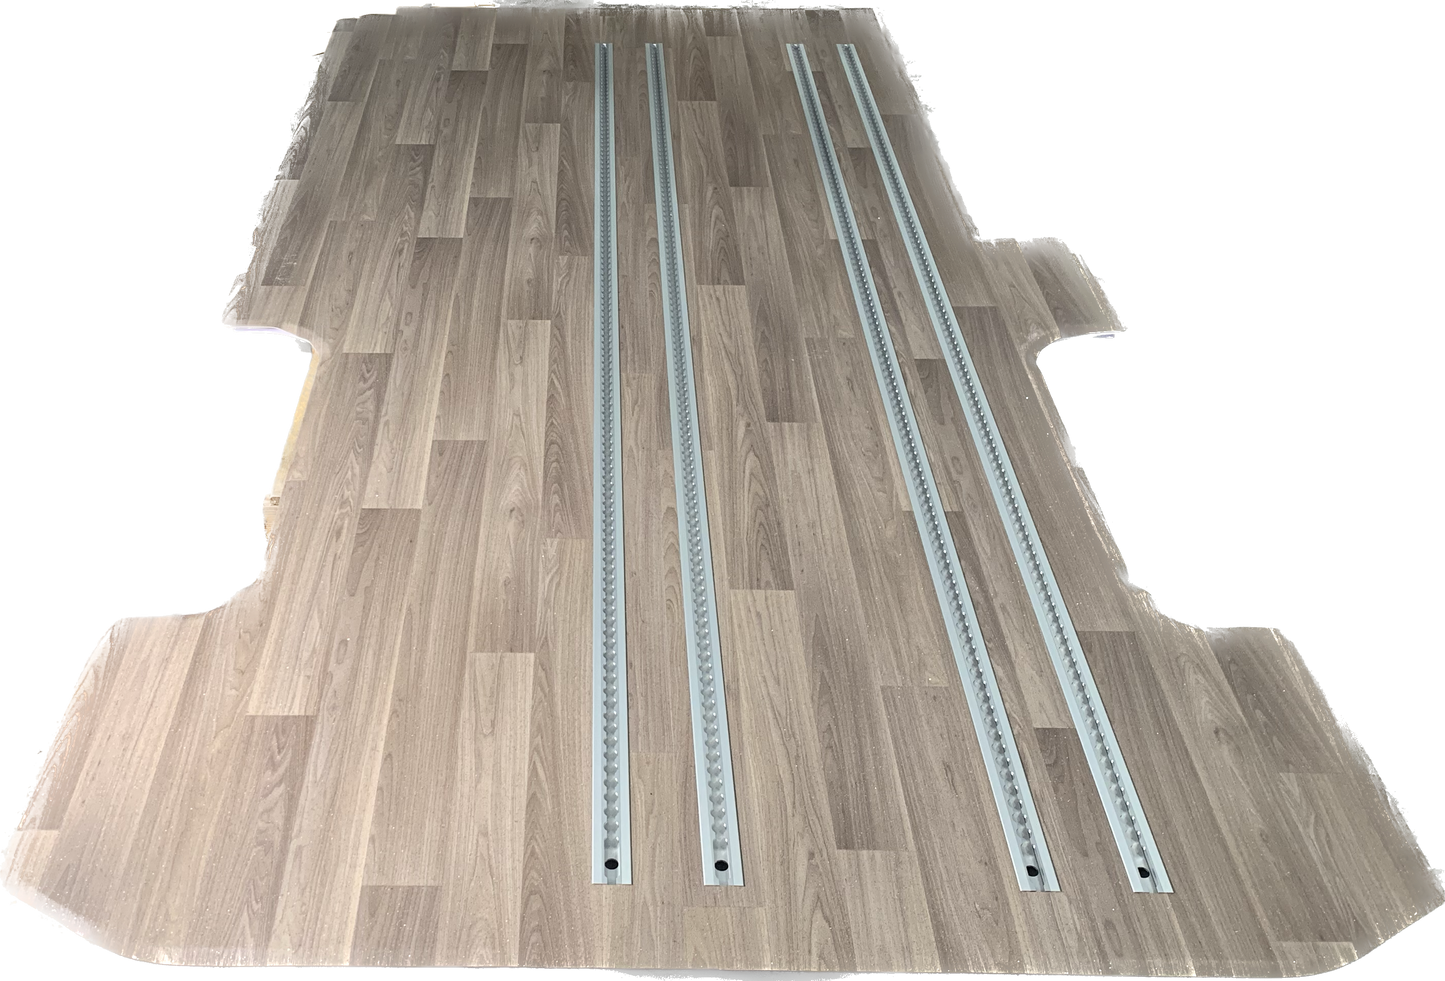 RAM ProMaster SafeTrack Composite Floor System